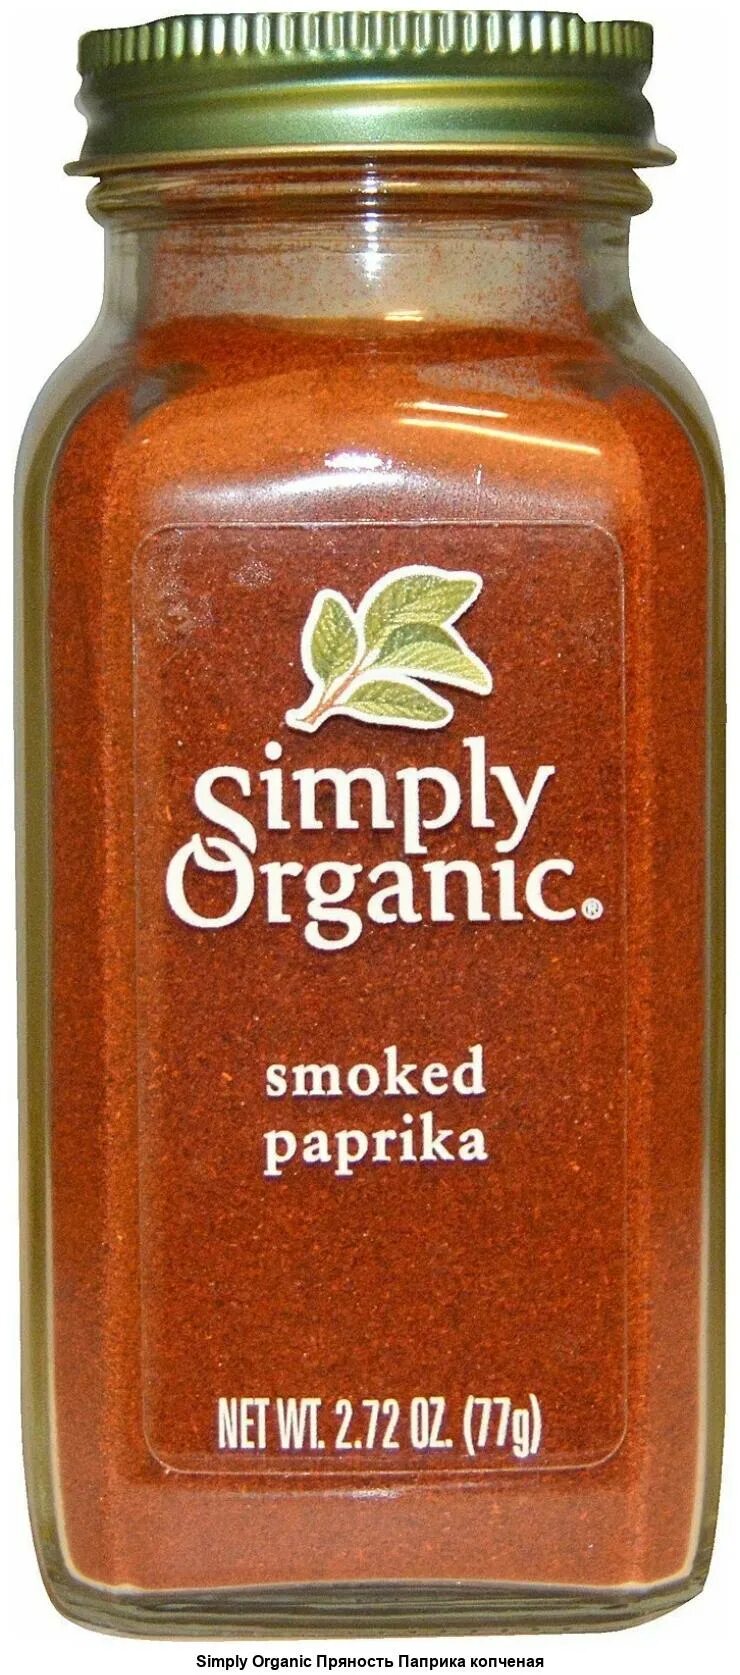 Симпли Органик специи. Simply Organic копченая паприка. Камис паприка копченая. Паприка копченая Smoked paprika.